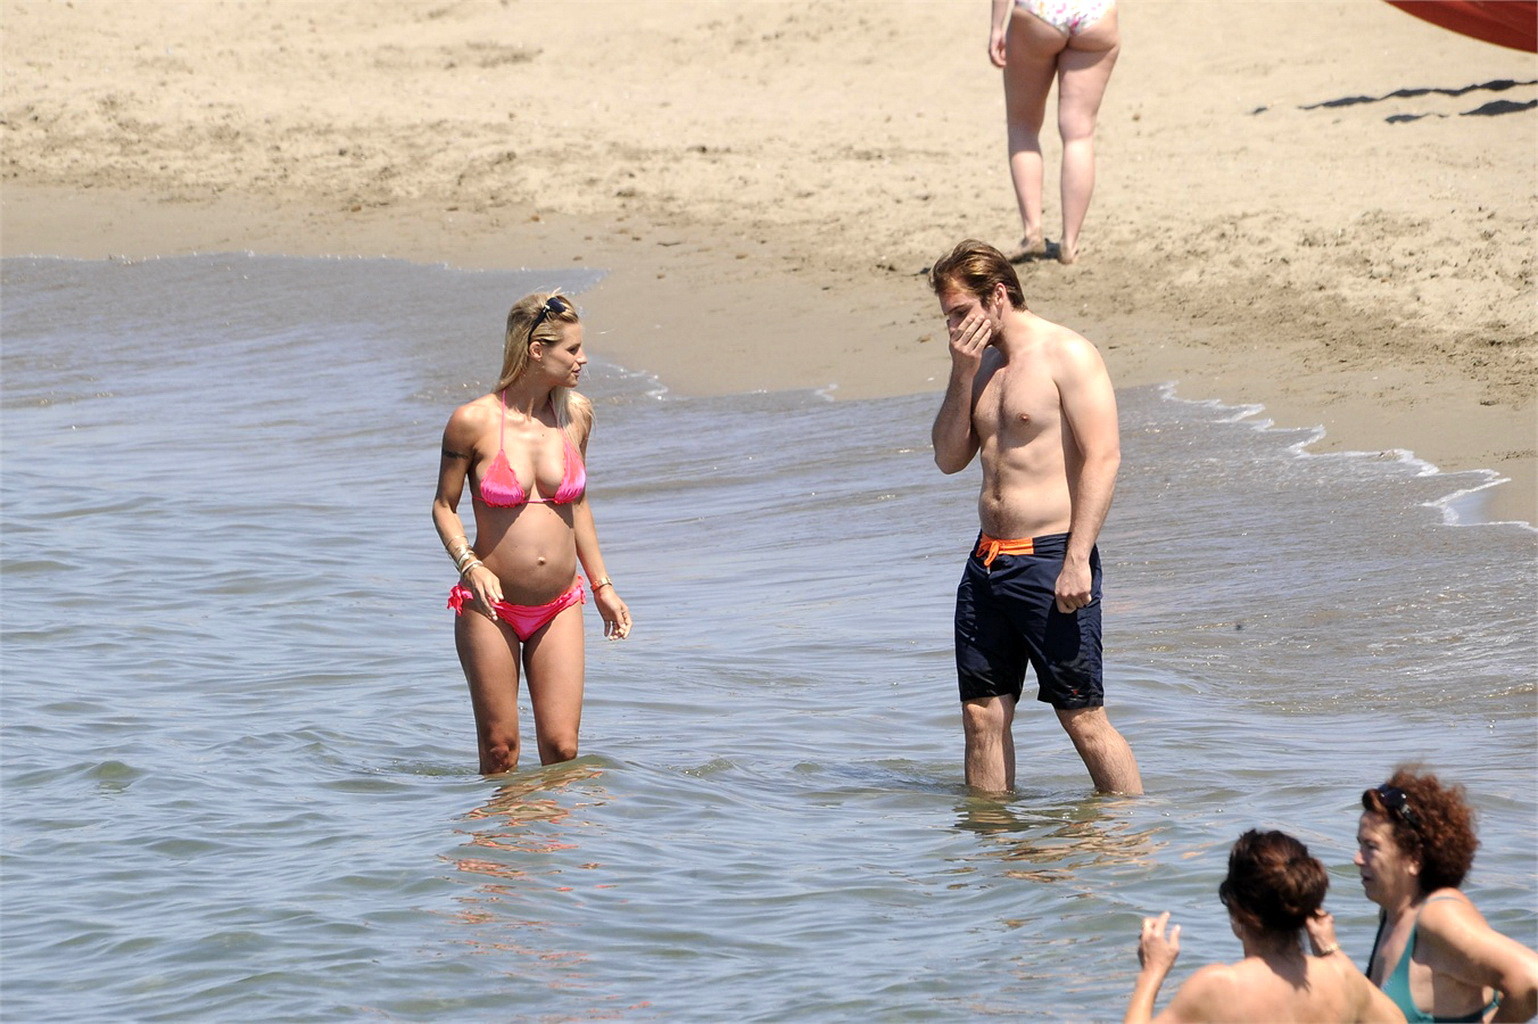 Michelle hunziker embarazada con un bikini en la playa de forte dei marmi, ita
 #75227870